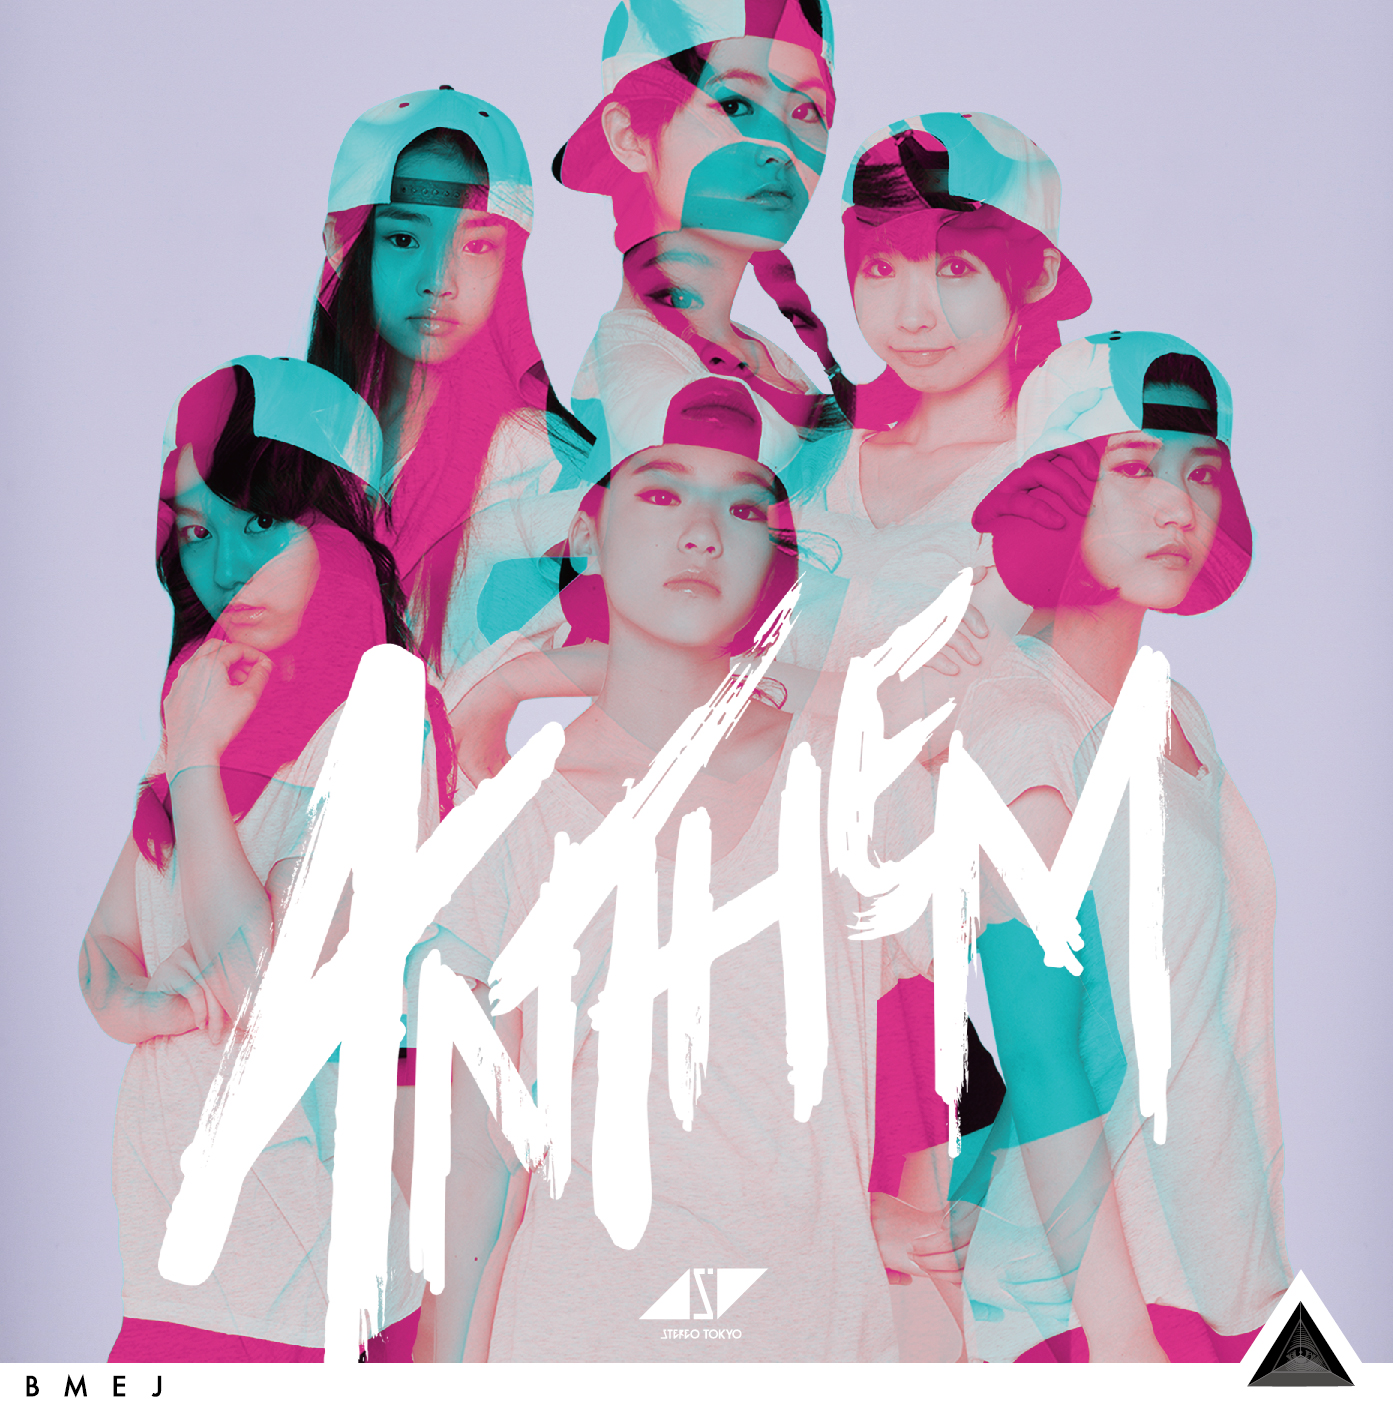 Anthem (Tokyo vers.)